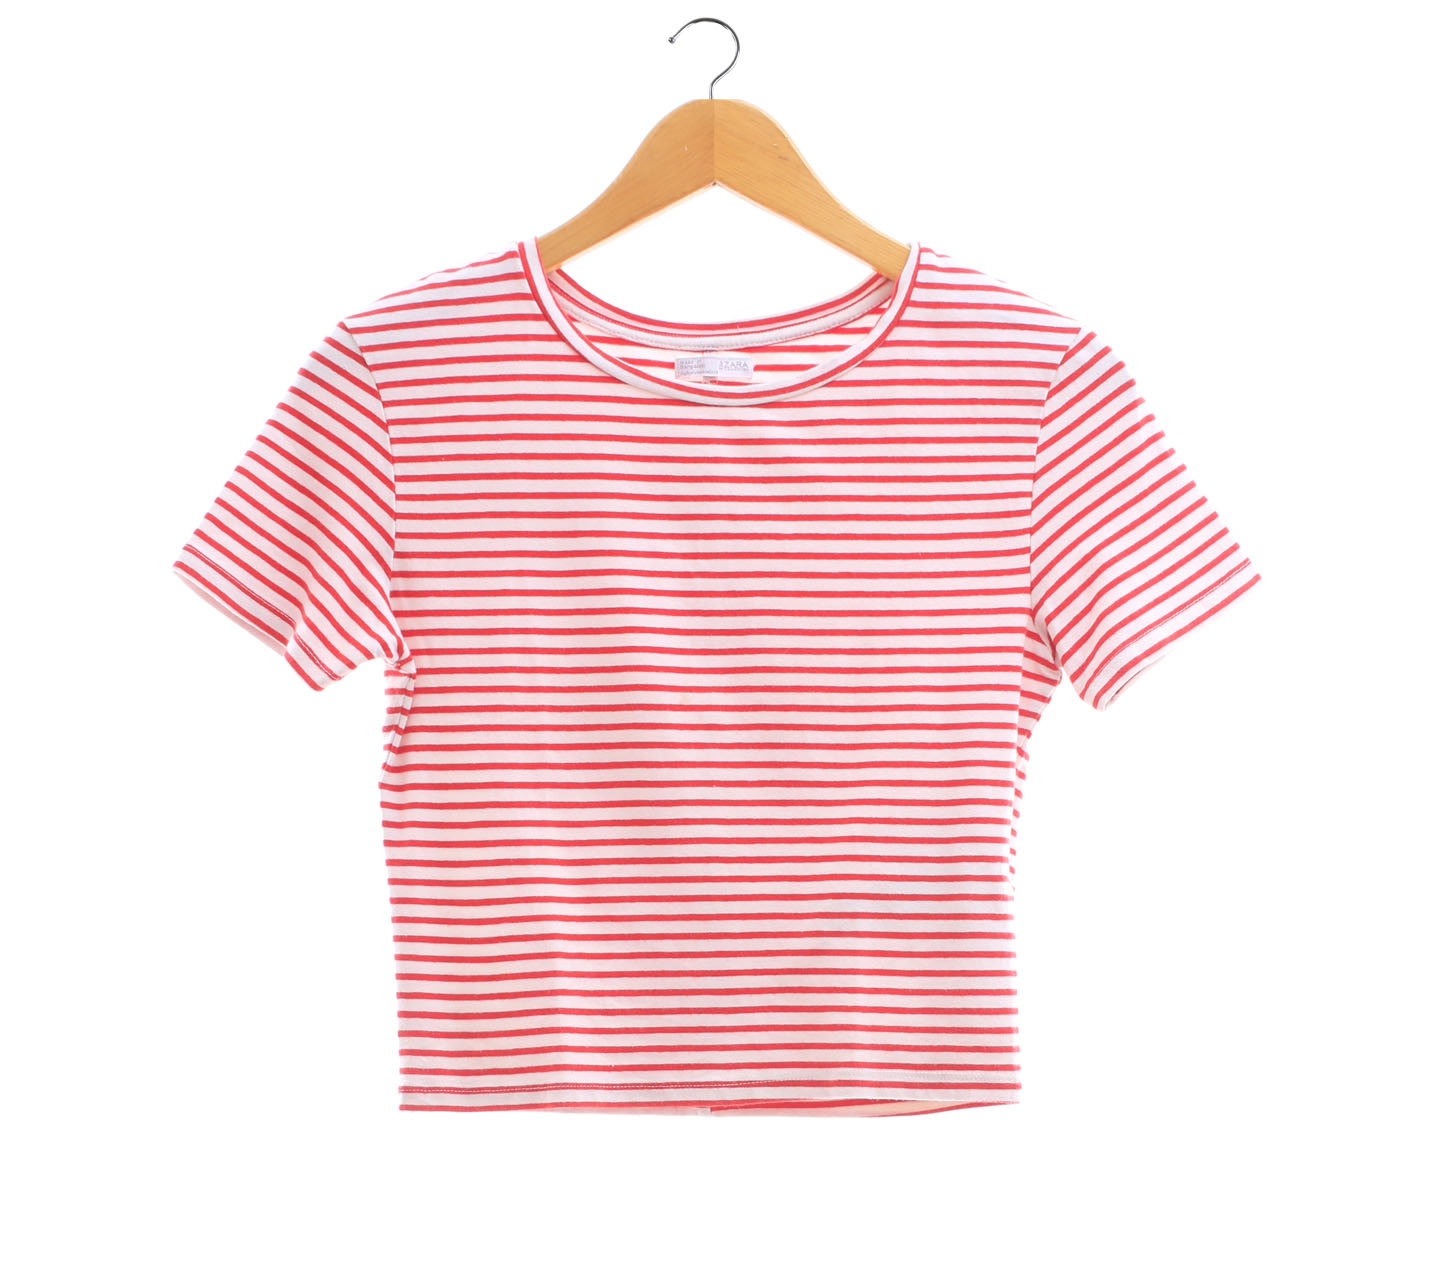 Zara Red & White Striped T-Shirt